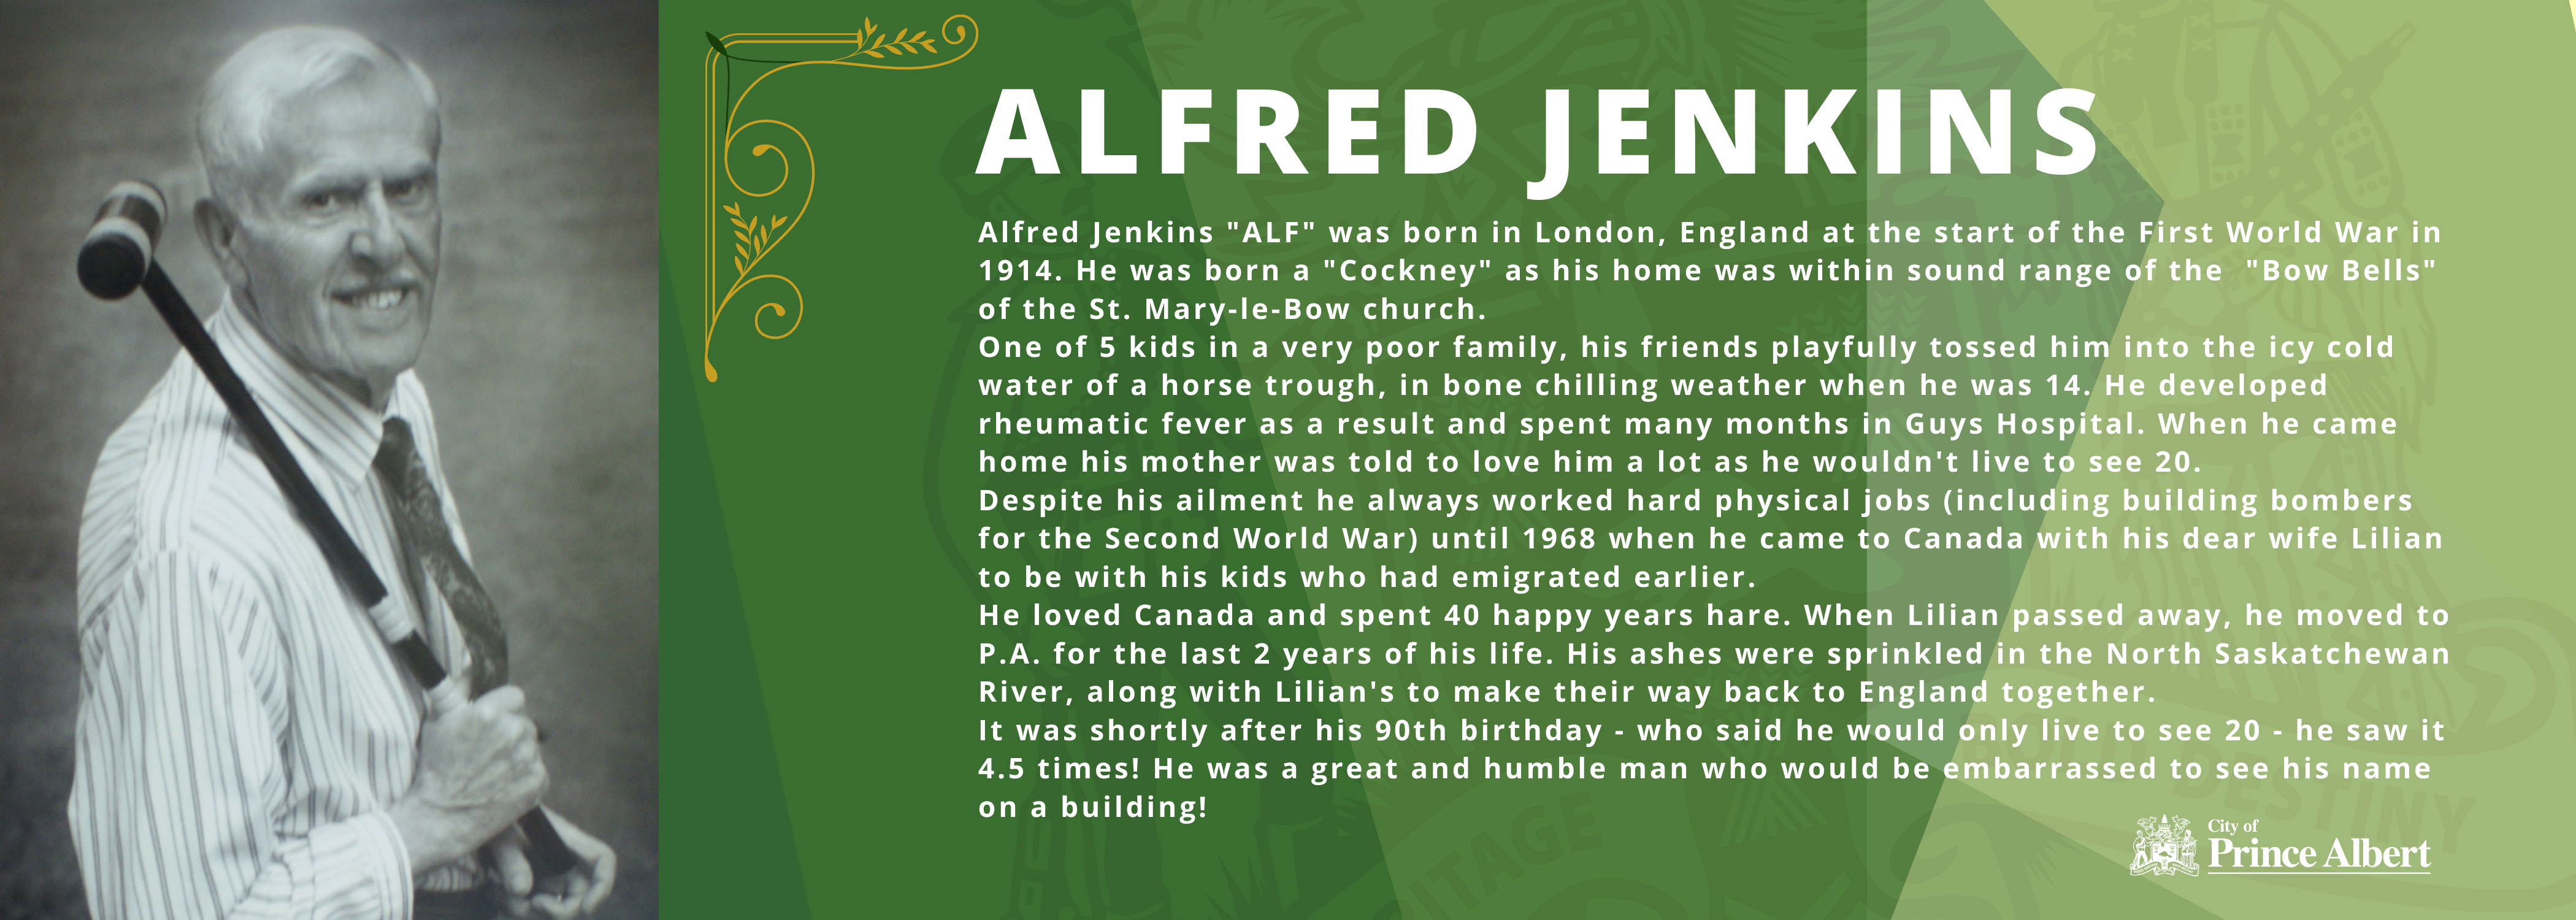 Alfred Jenkins bio